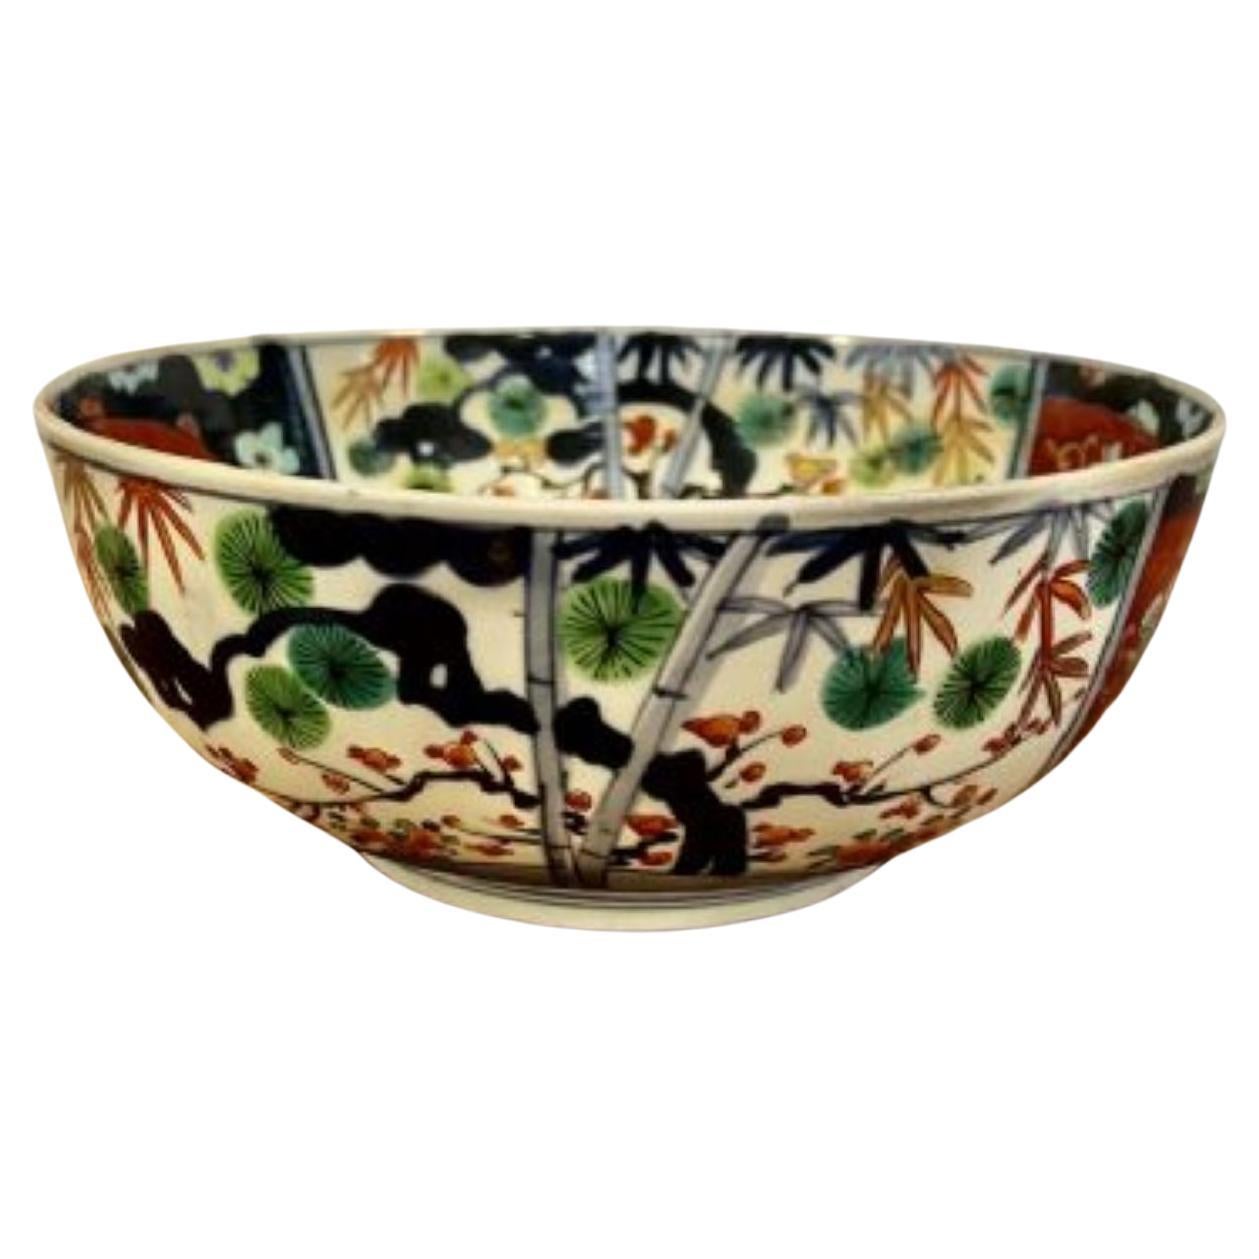 Lovely antique Japanese imari bowl 